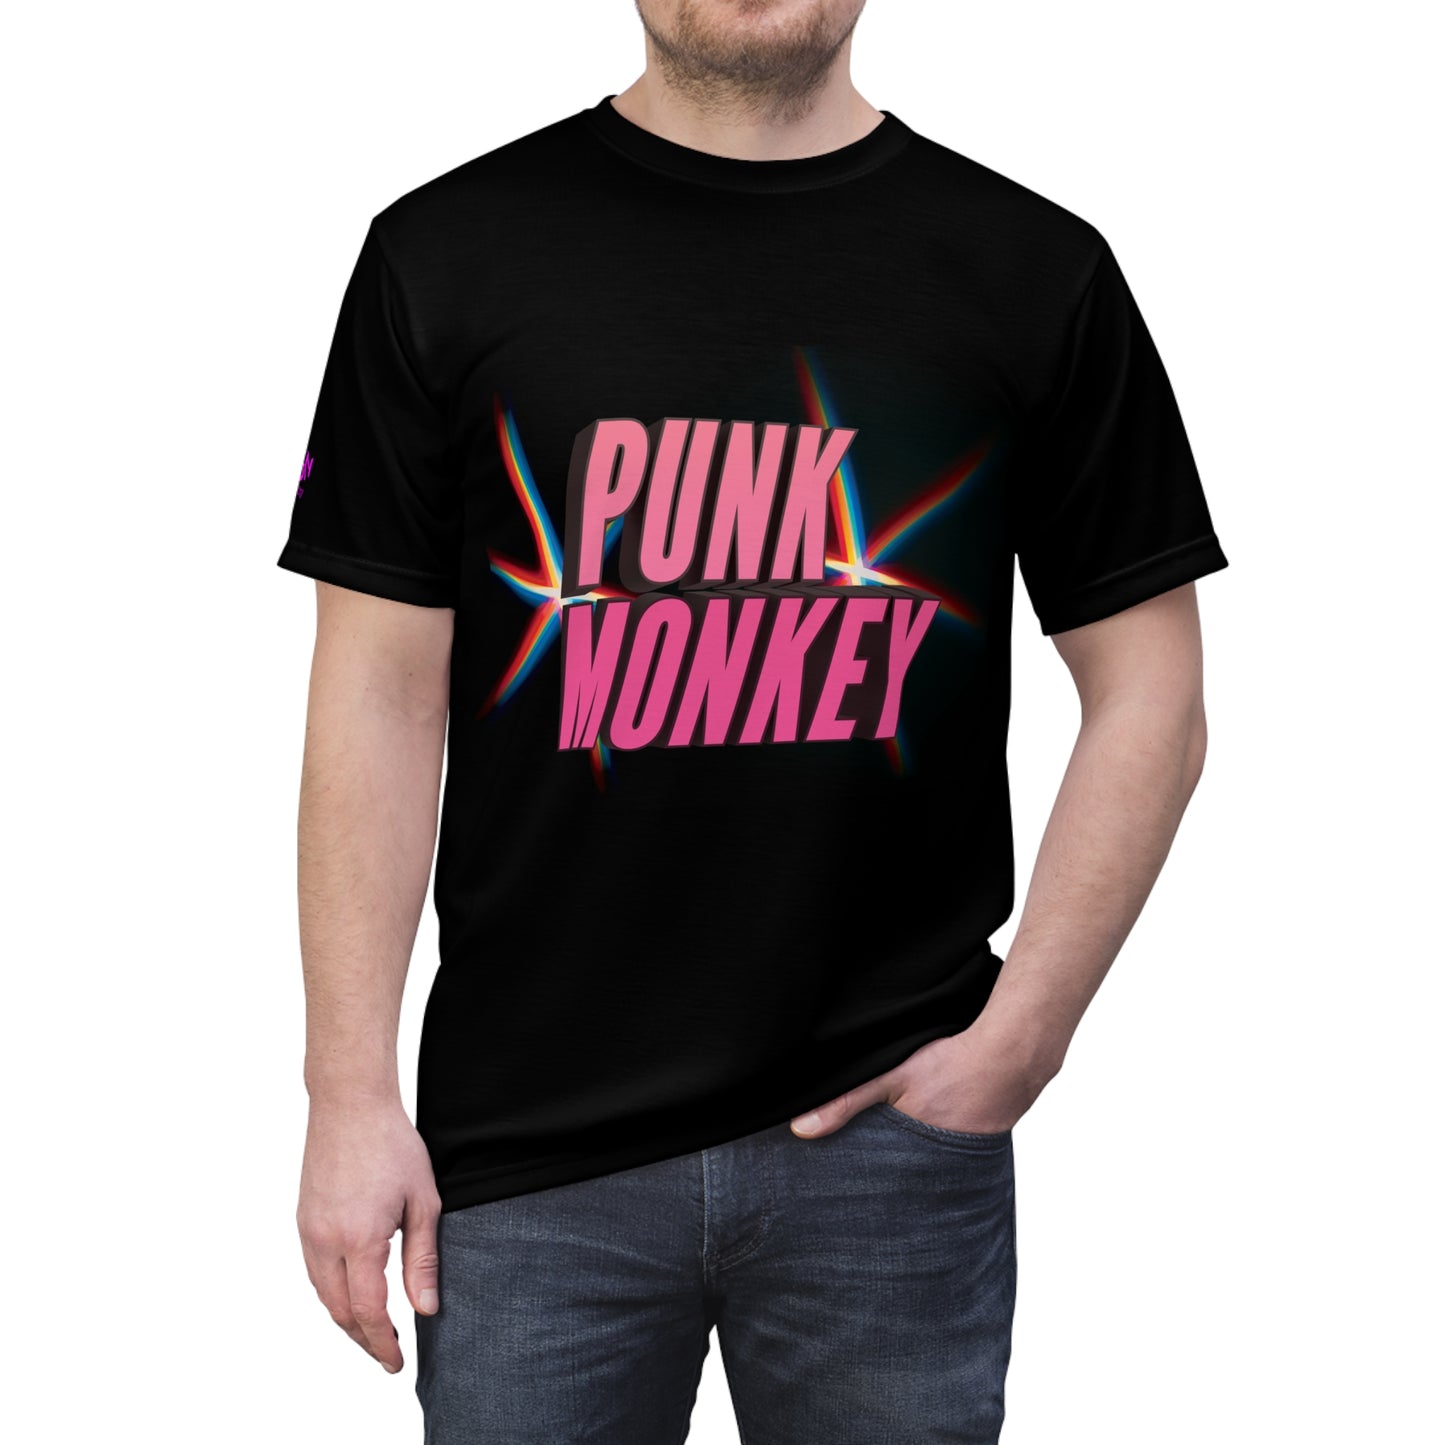 Punk Monkey "Star"